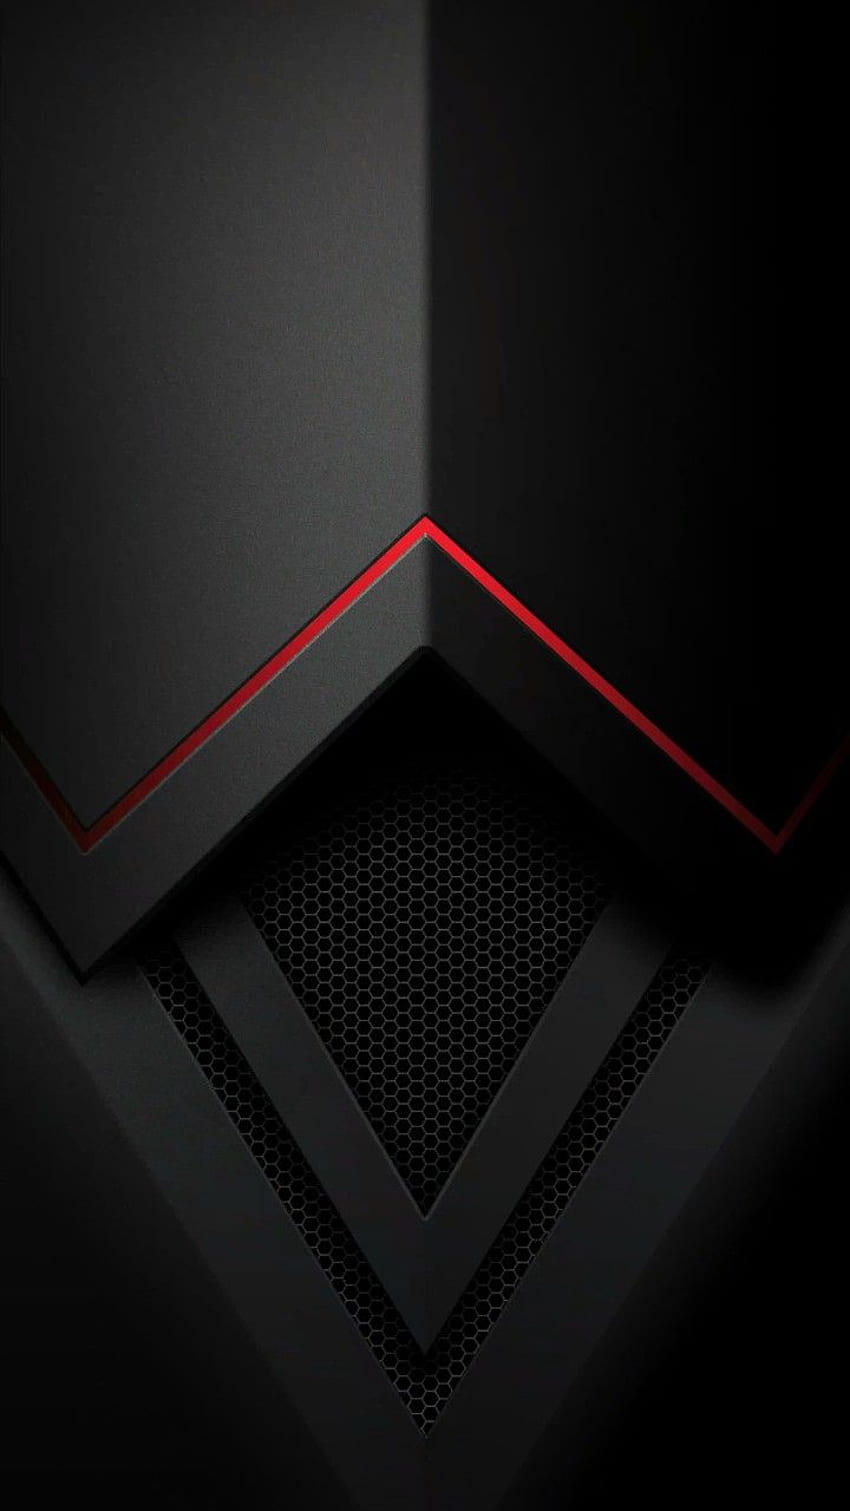 Luz roja JMC apagada, forma negra poligonal, detalle de diseño industrial, forma triangular, forma en ángulo, teléfono móvil P, teléfono oscuro, Android fondo de pantalla del teléfono